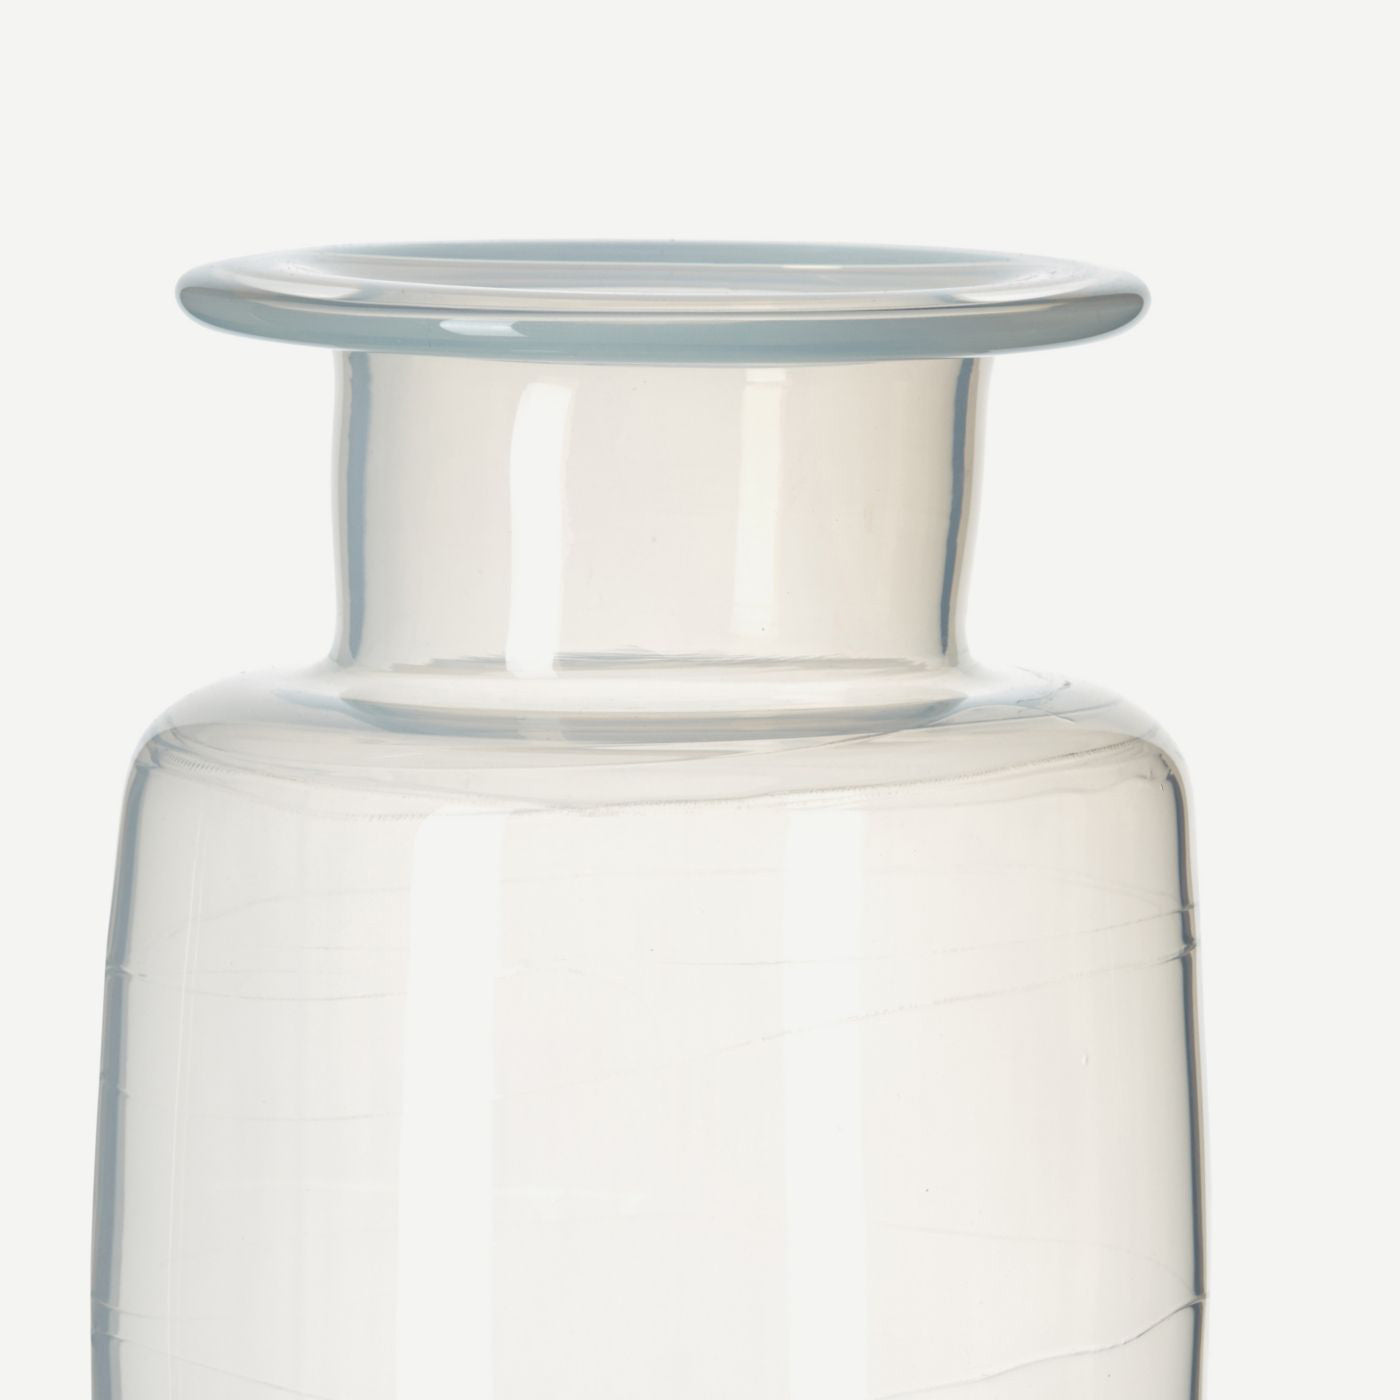 Albaster jar in medium